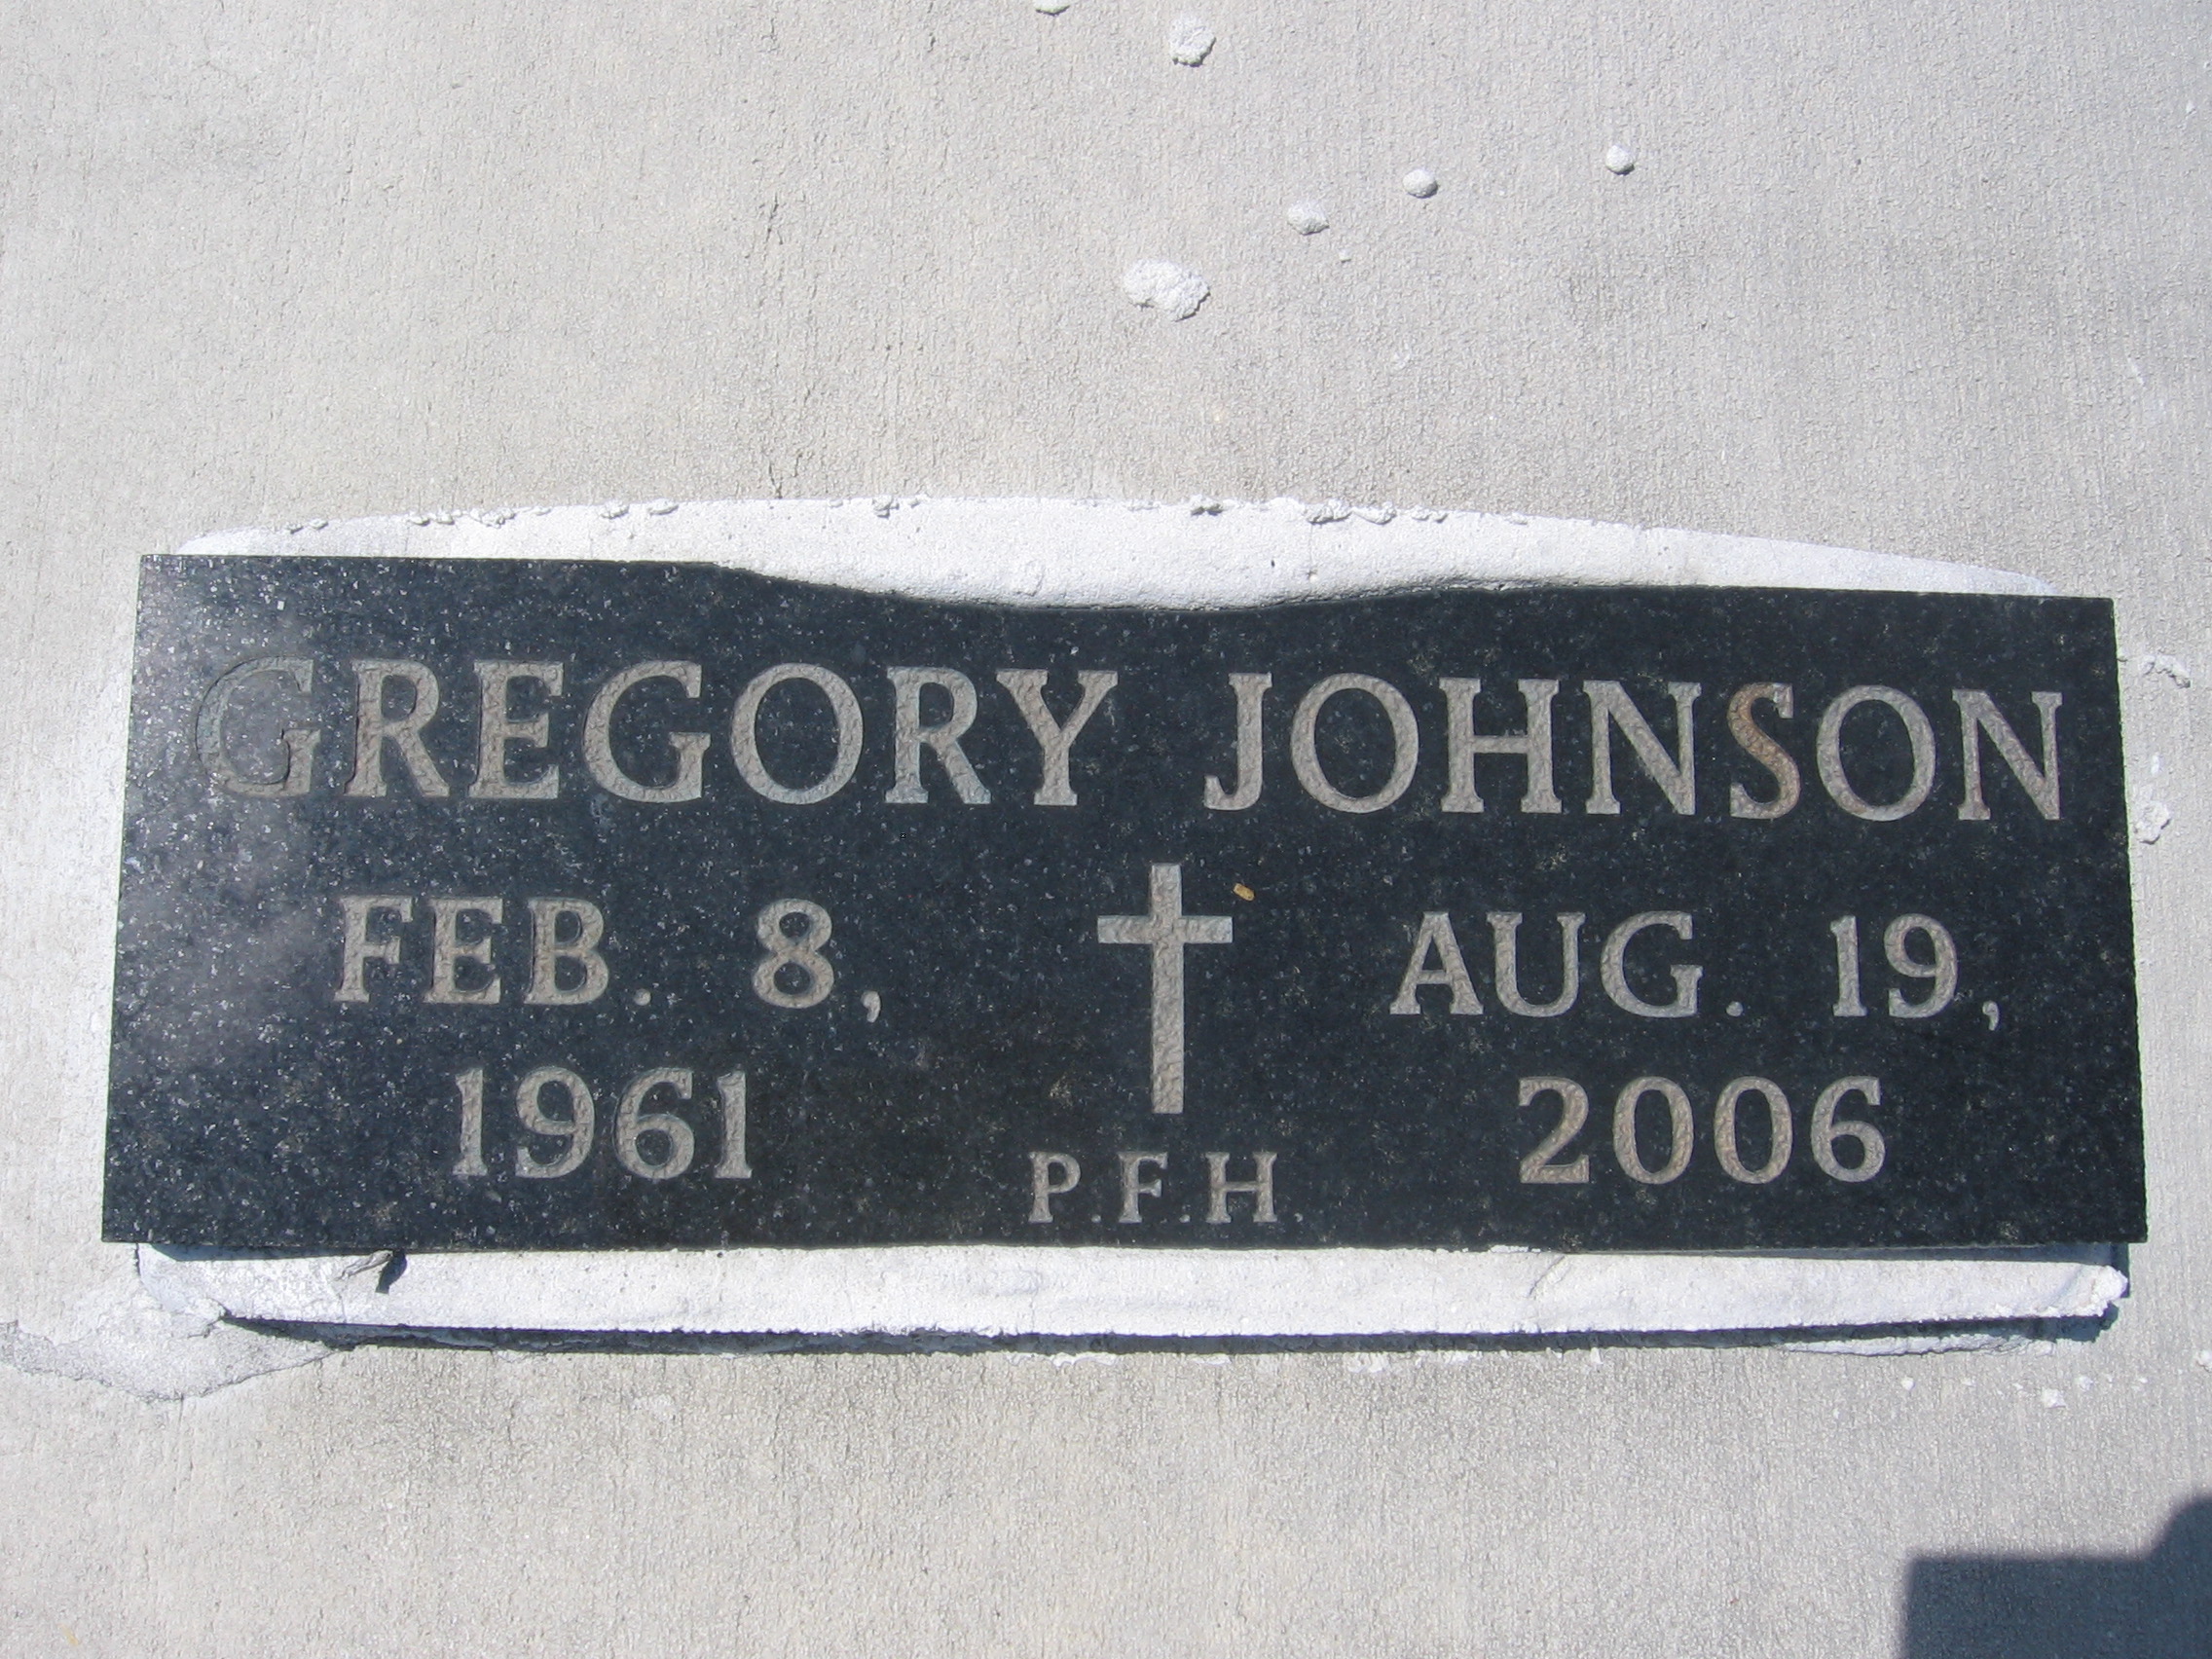 Gregory Johnson